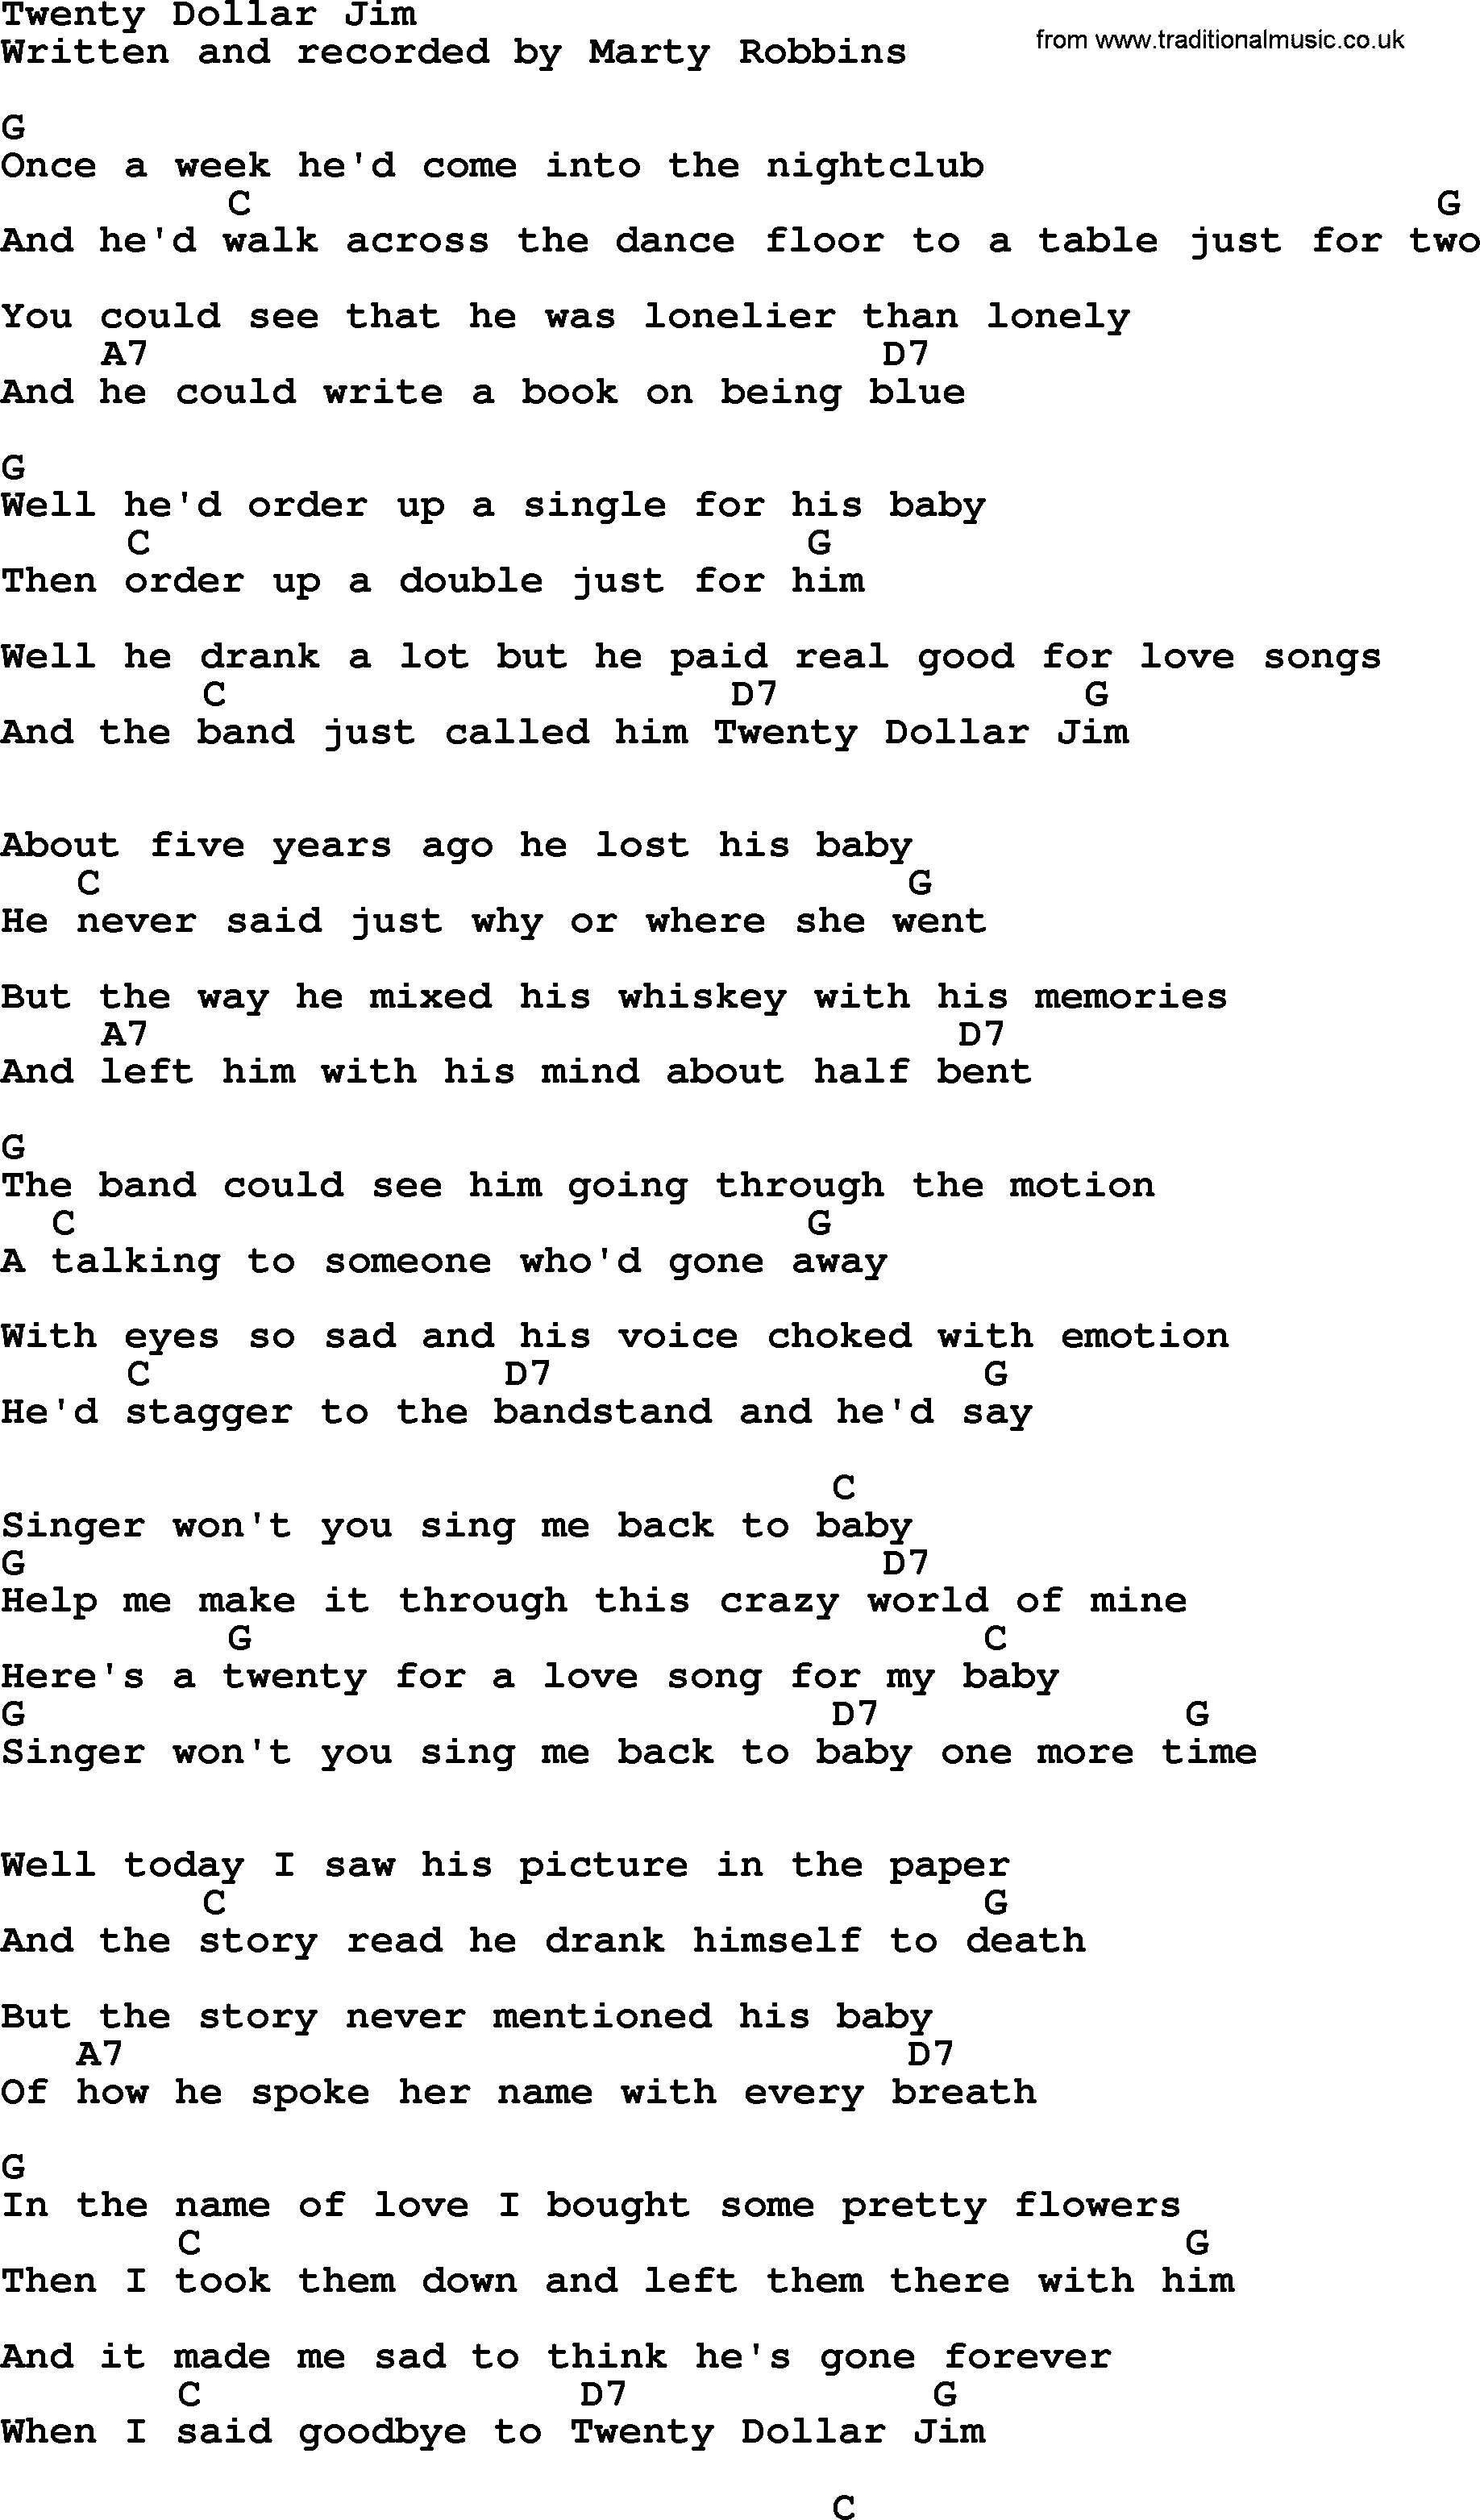 Marty Robbins song: Twenty Dollar Jim, lyrics and chords